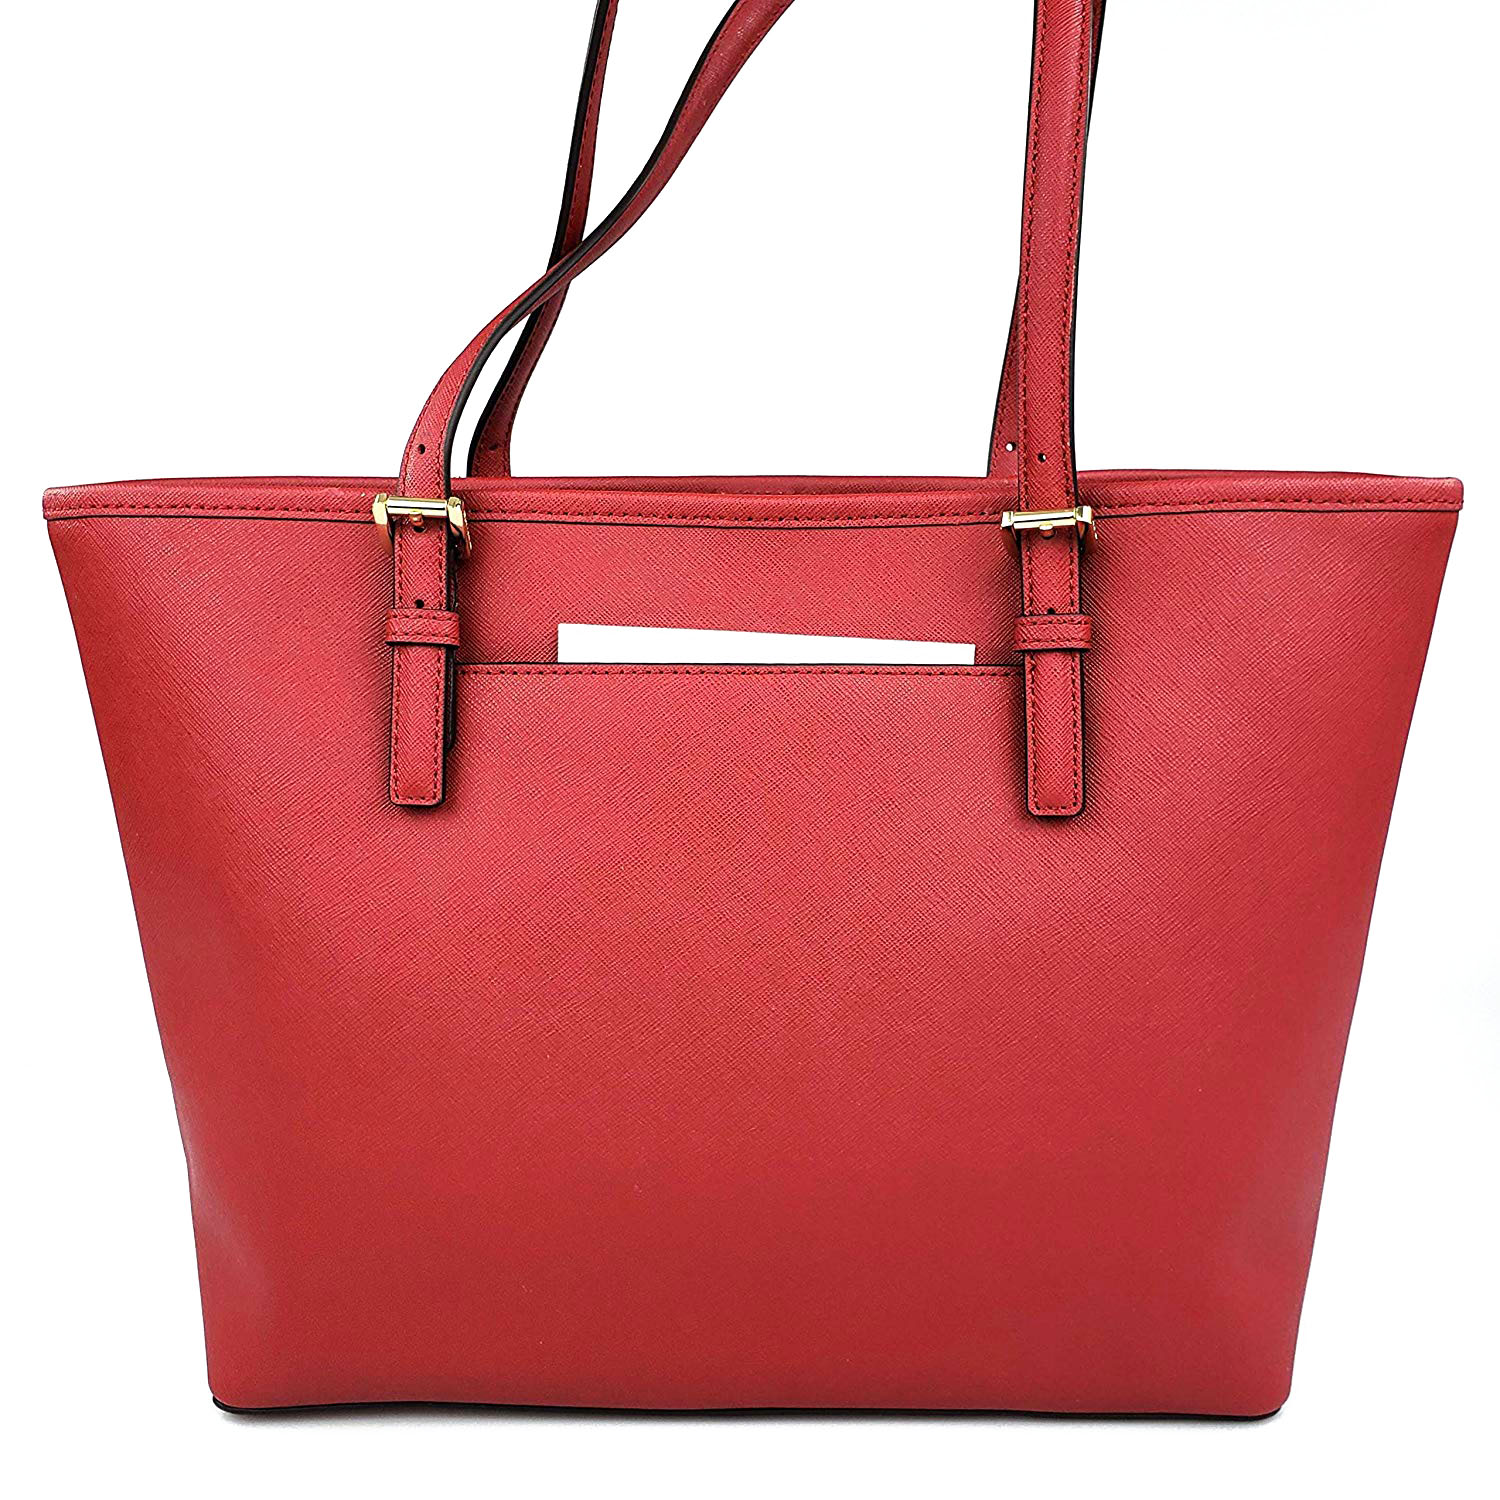 MICHAEL KORS Red Leather Crossbody Bag #26227